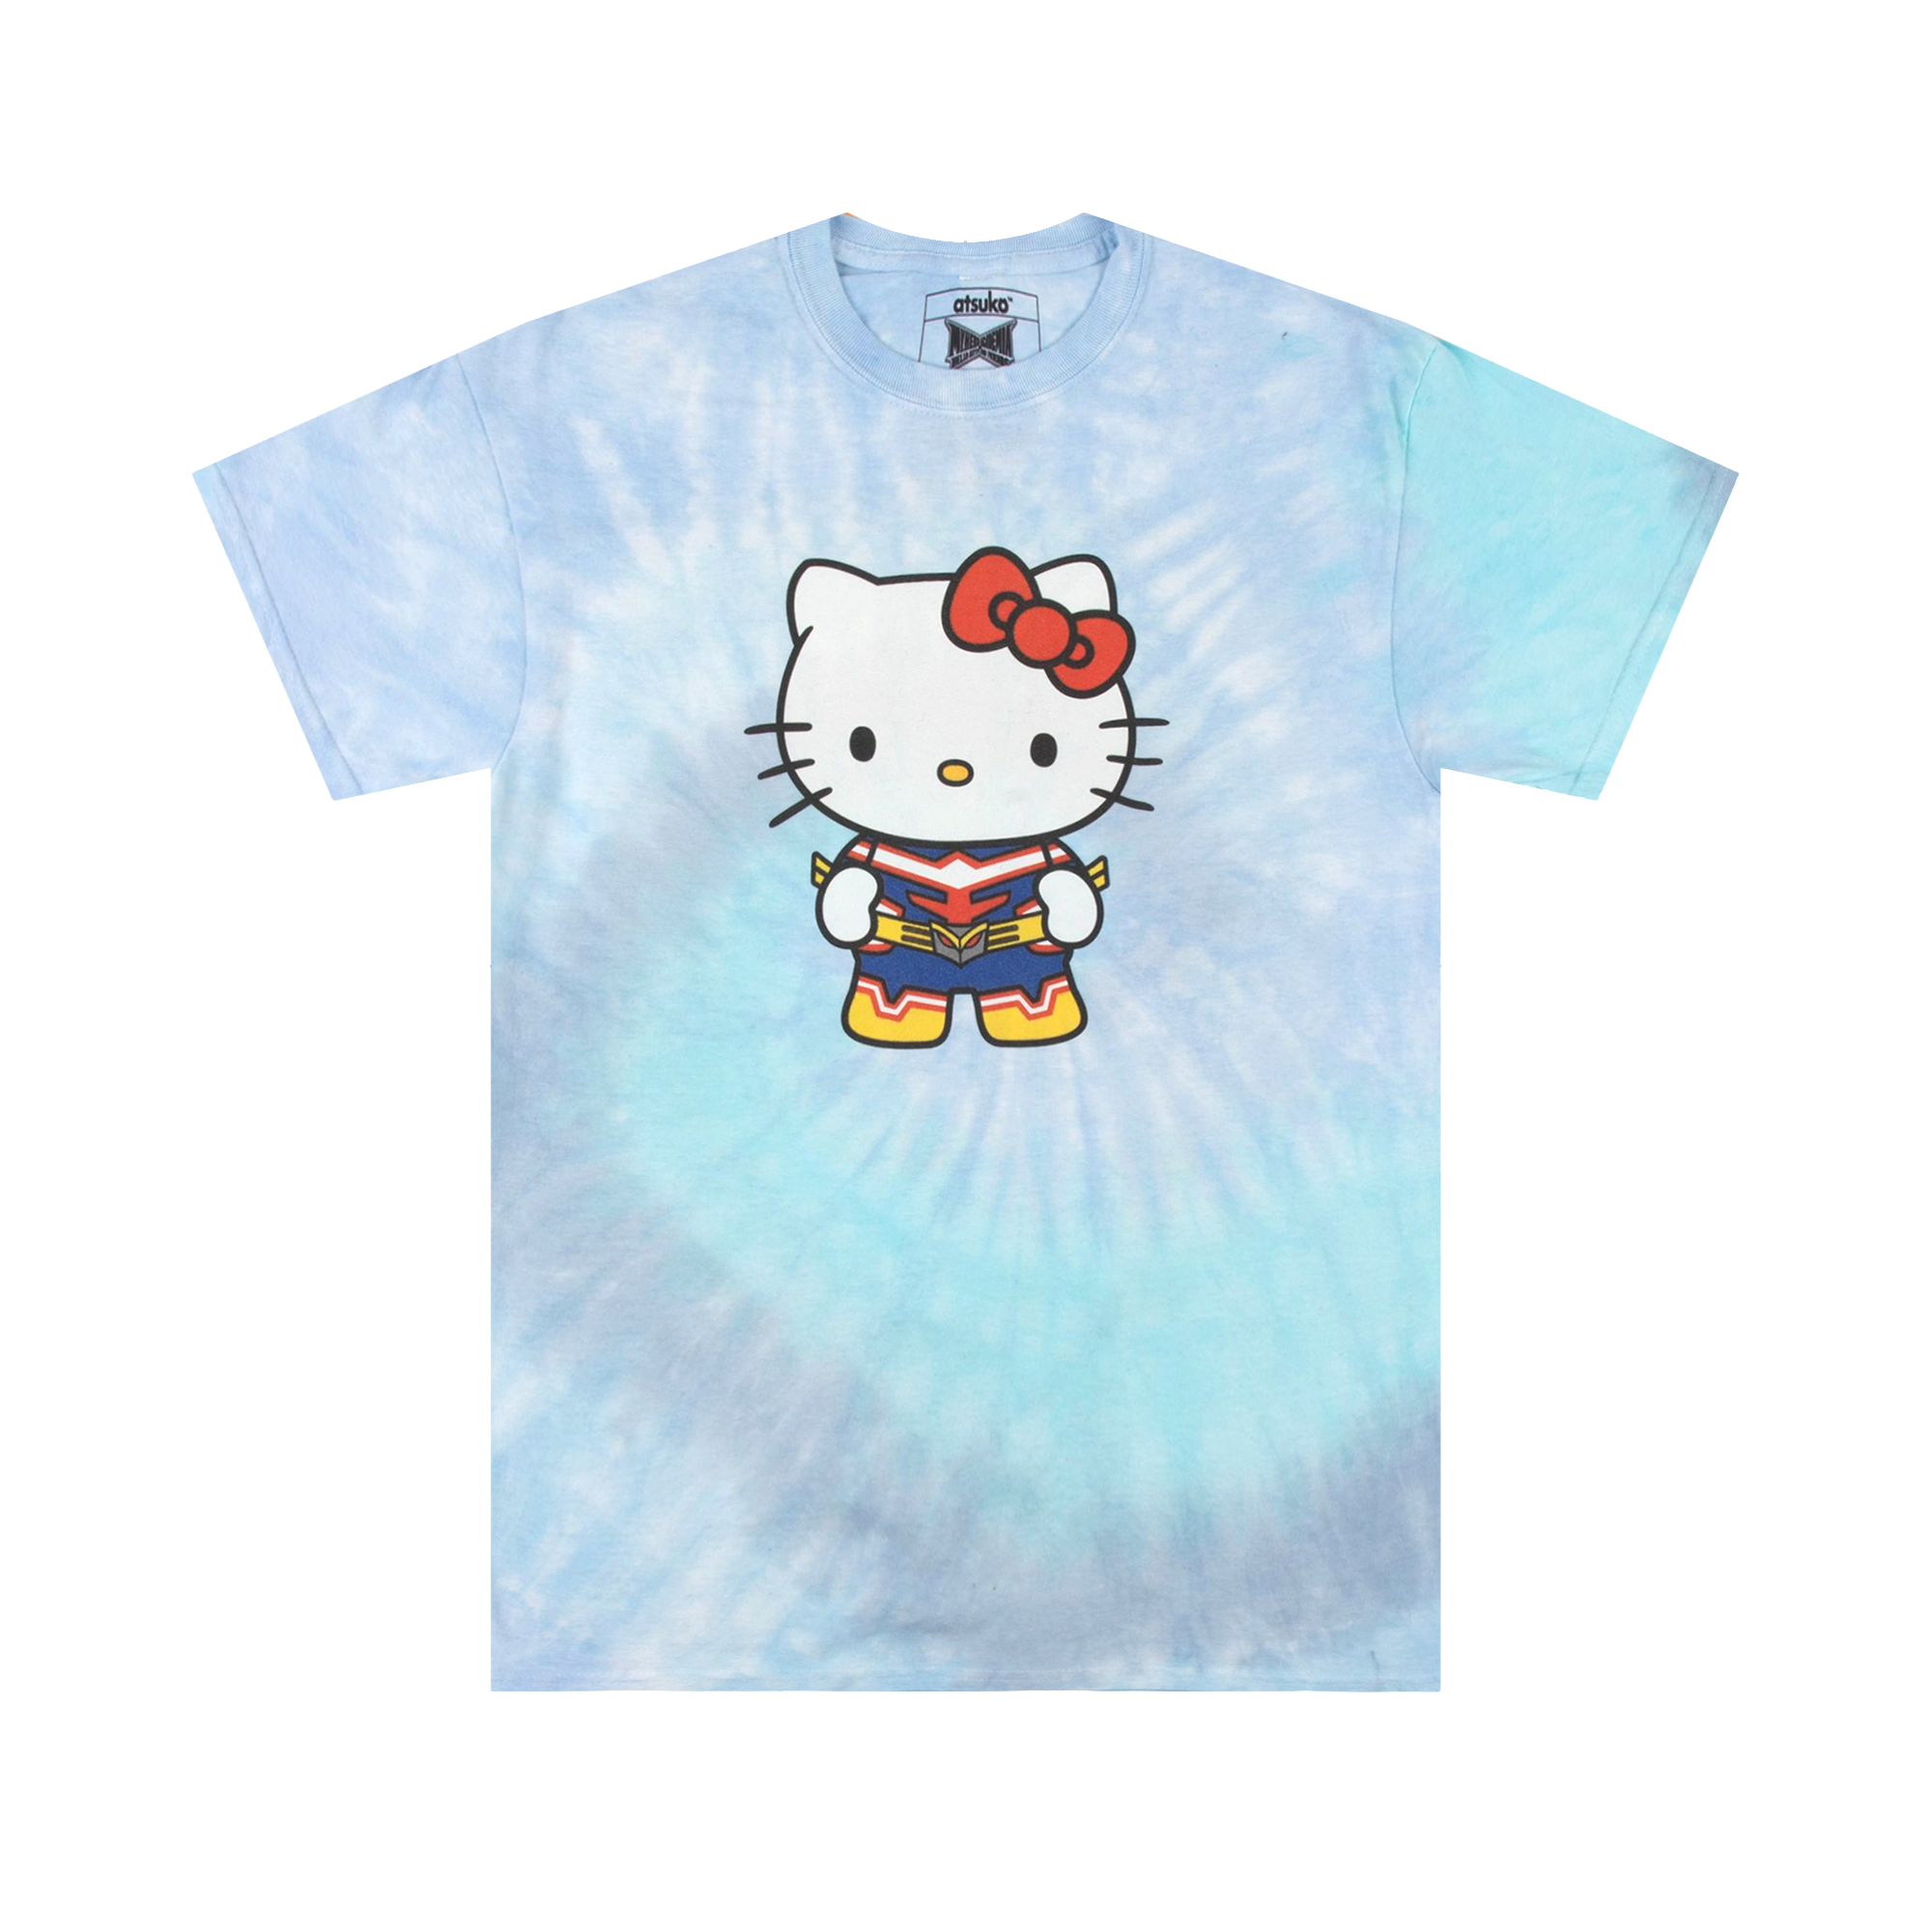 T-shirt Hello Kitty Sleeve Clothing, T-shirt, tshirt, white png